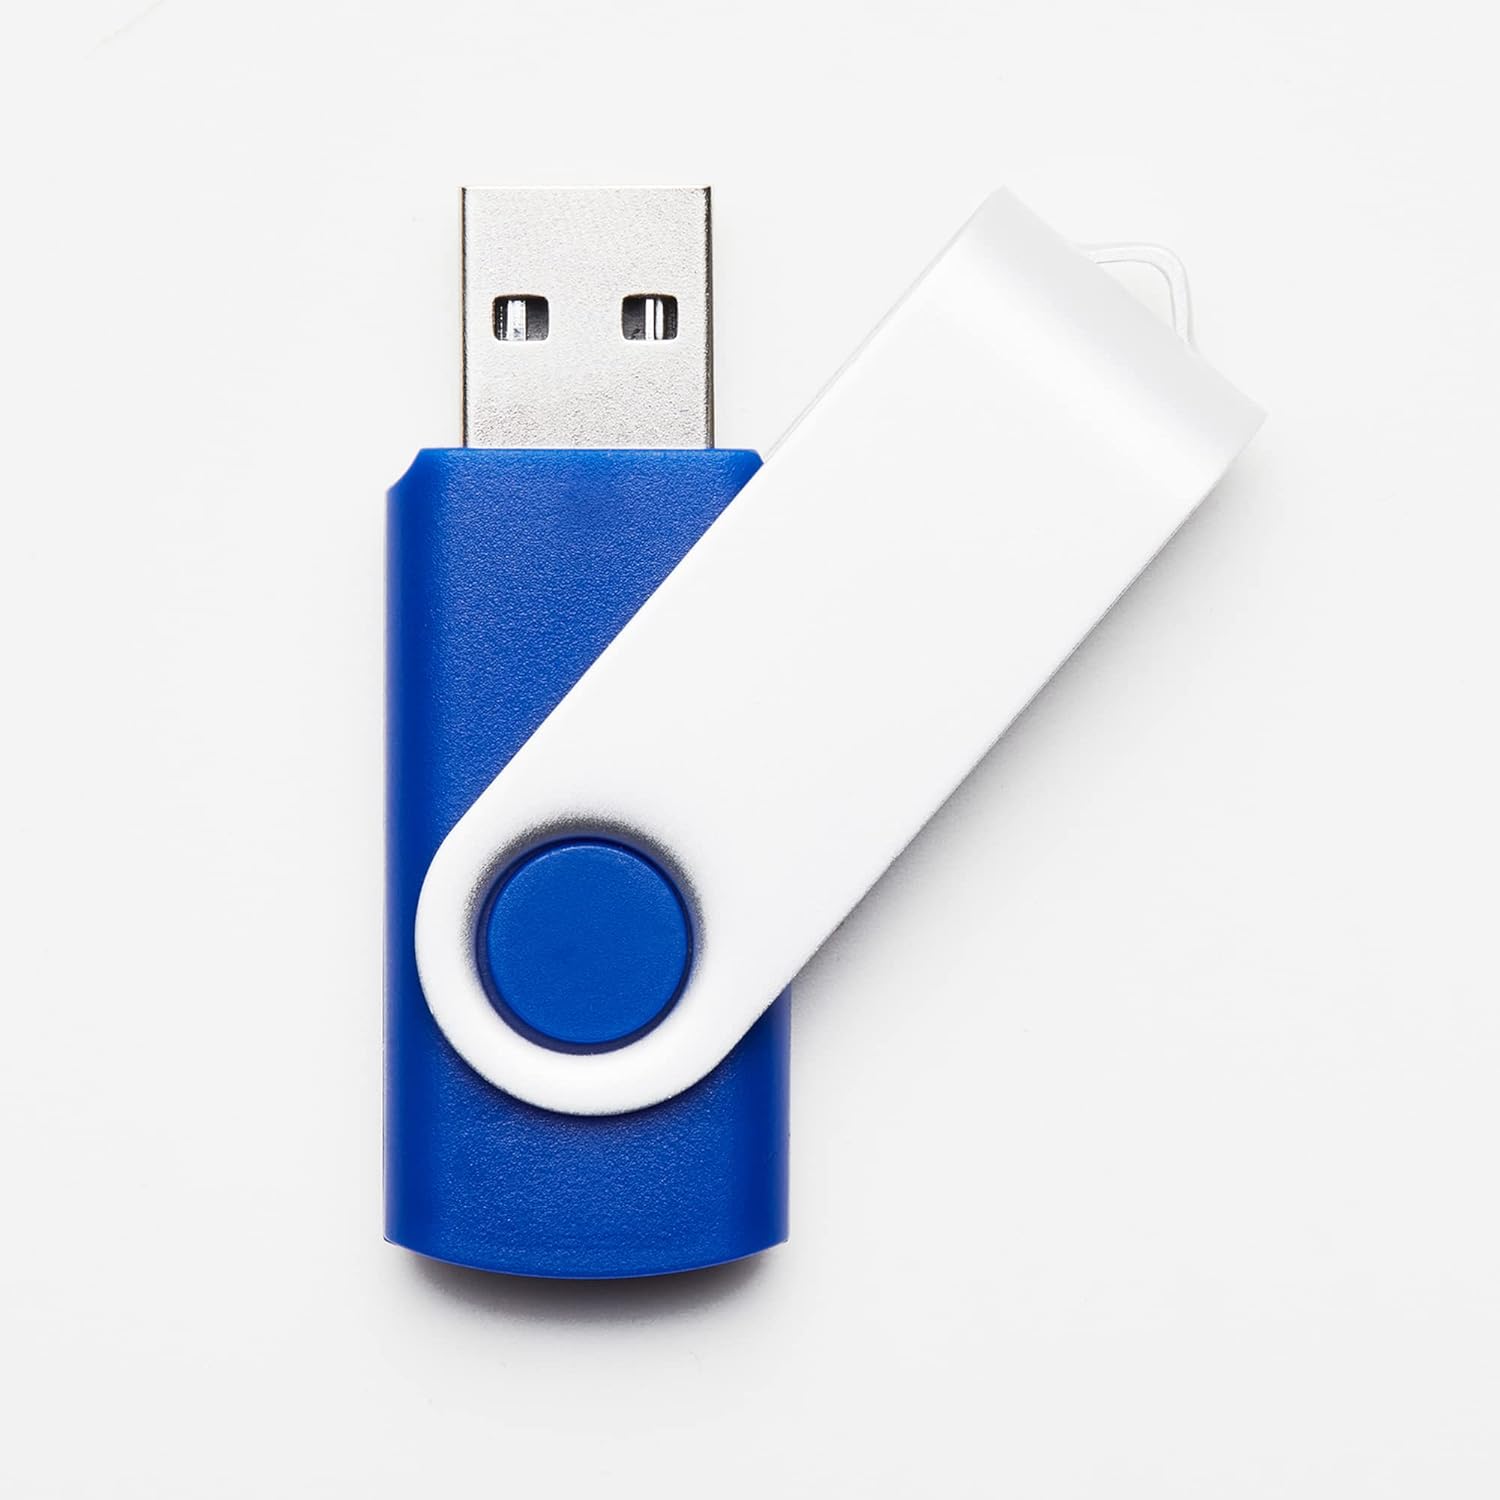 50 Clé USB 2.0 Flash Drive USB Pivotant